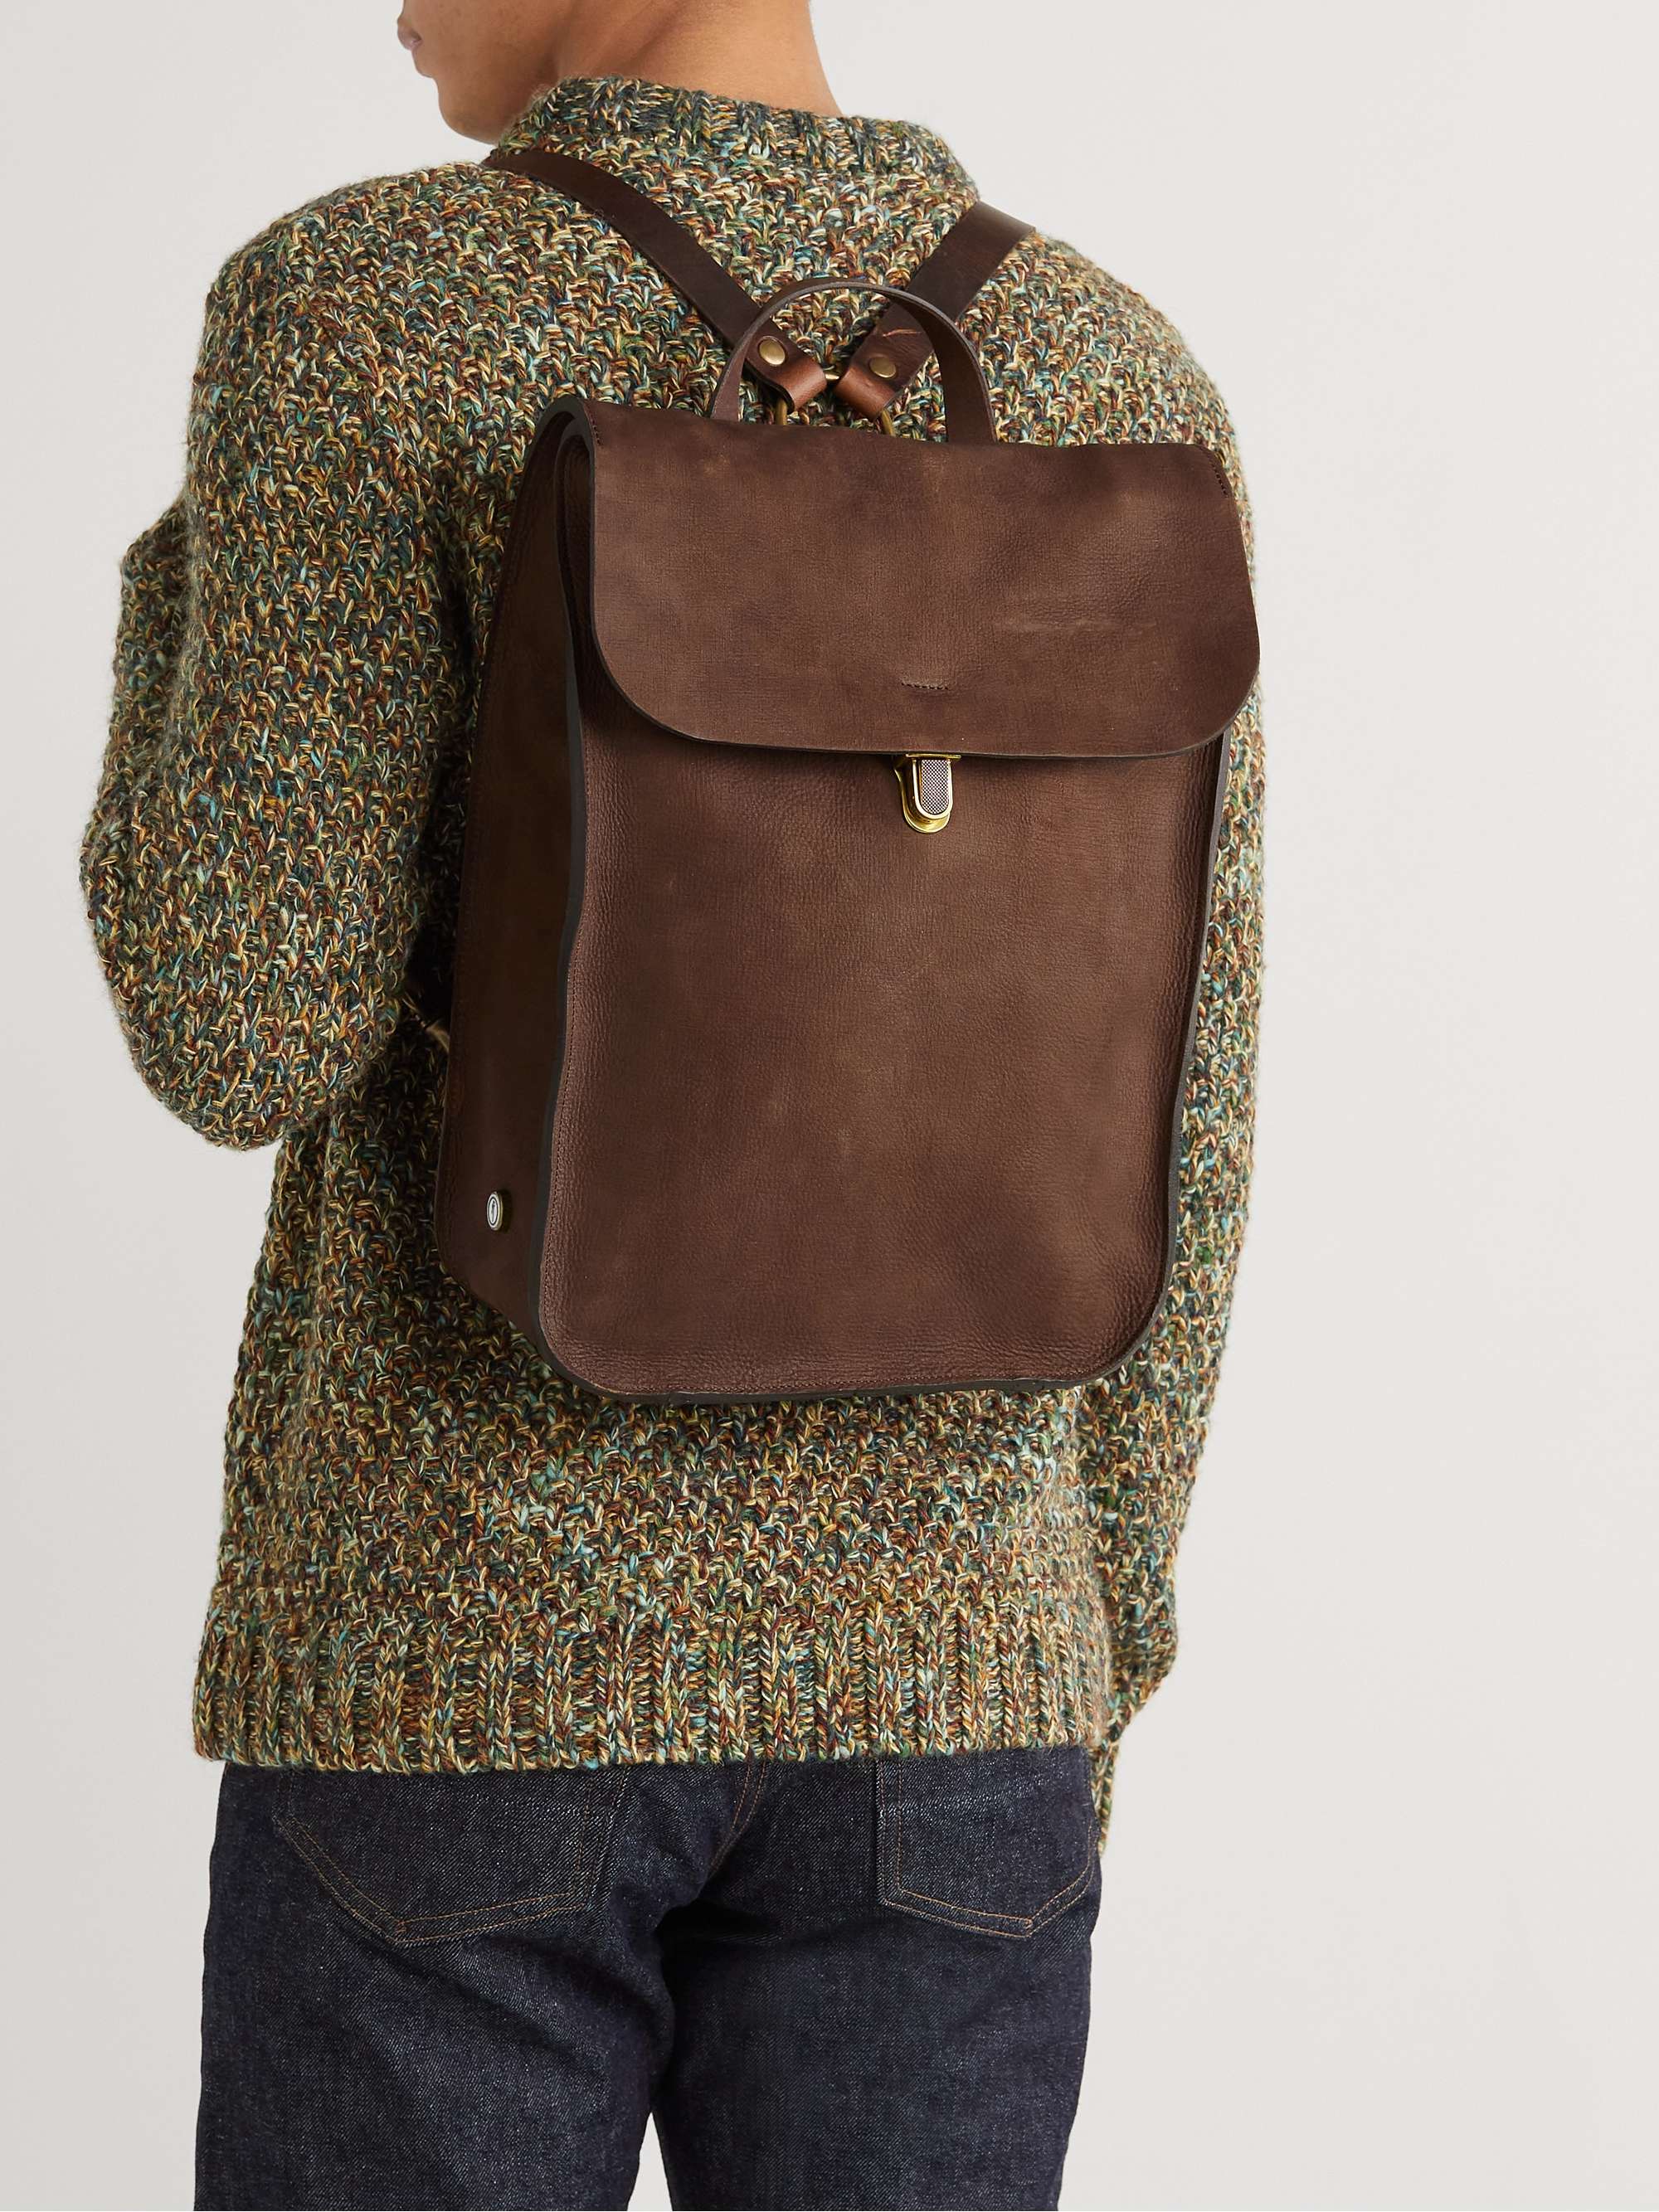 BLEU DE CHAUFFE Full-Grain Leather Backpack